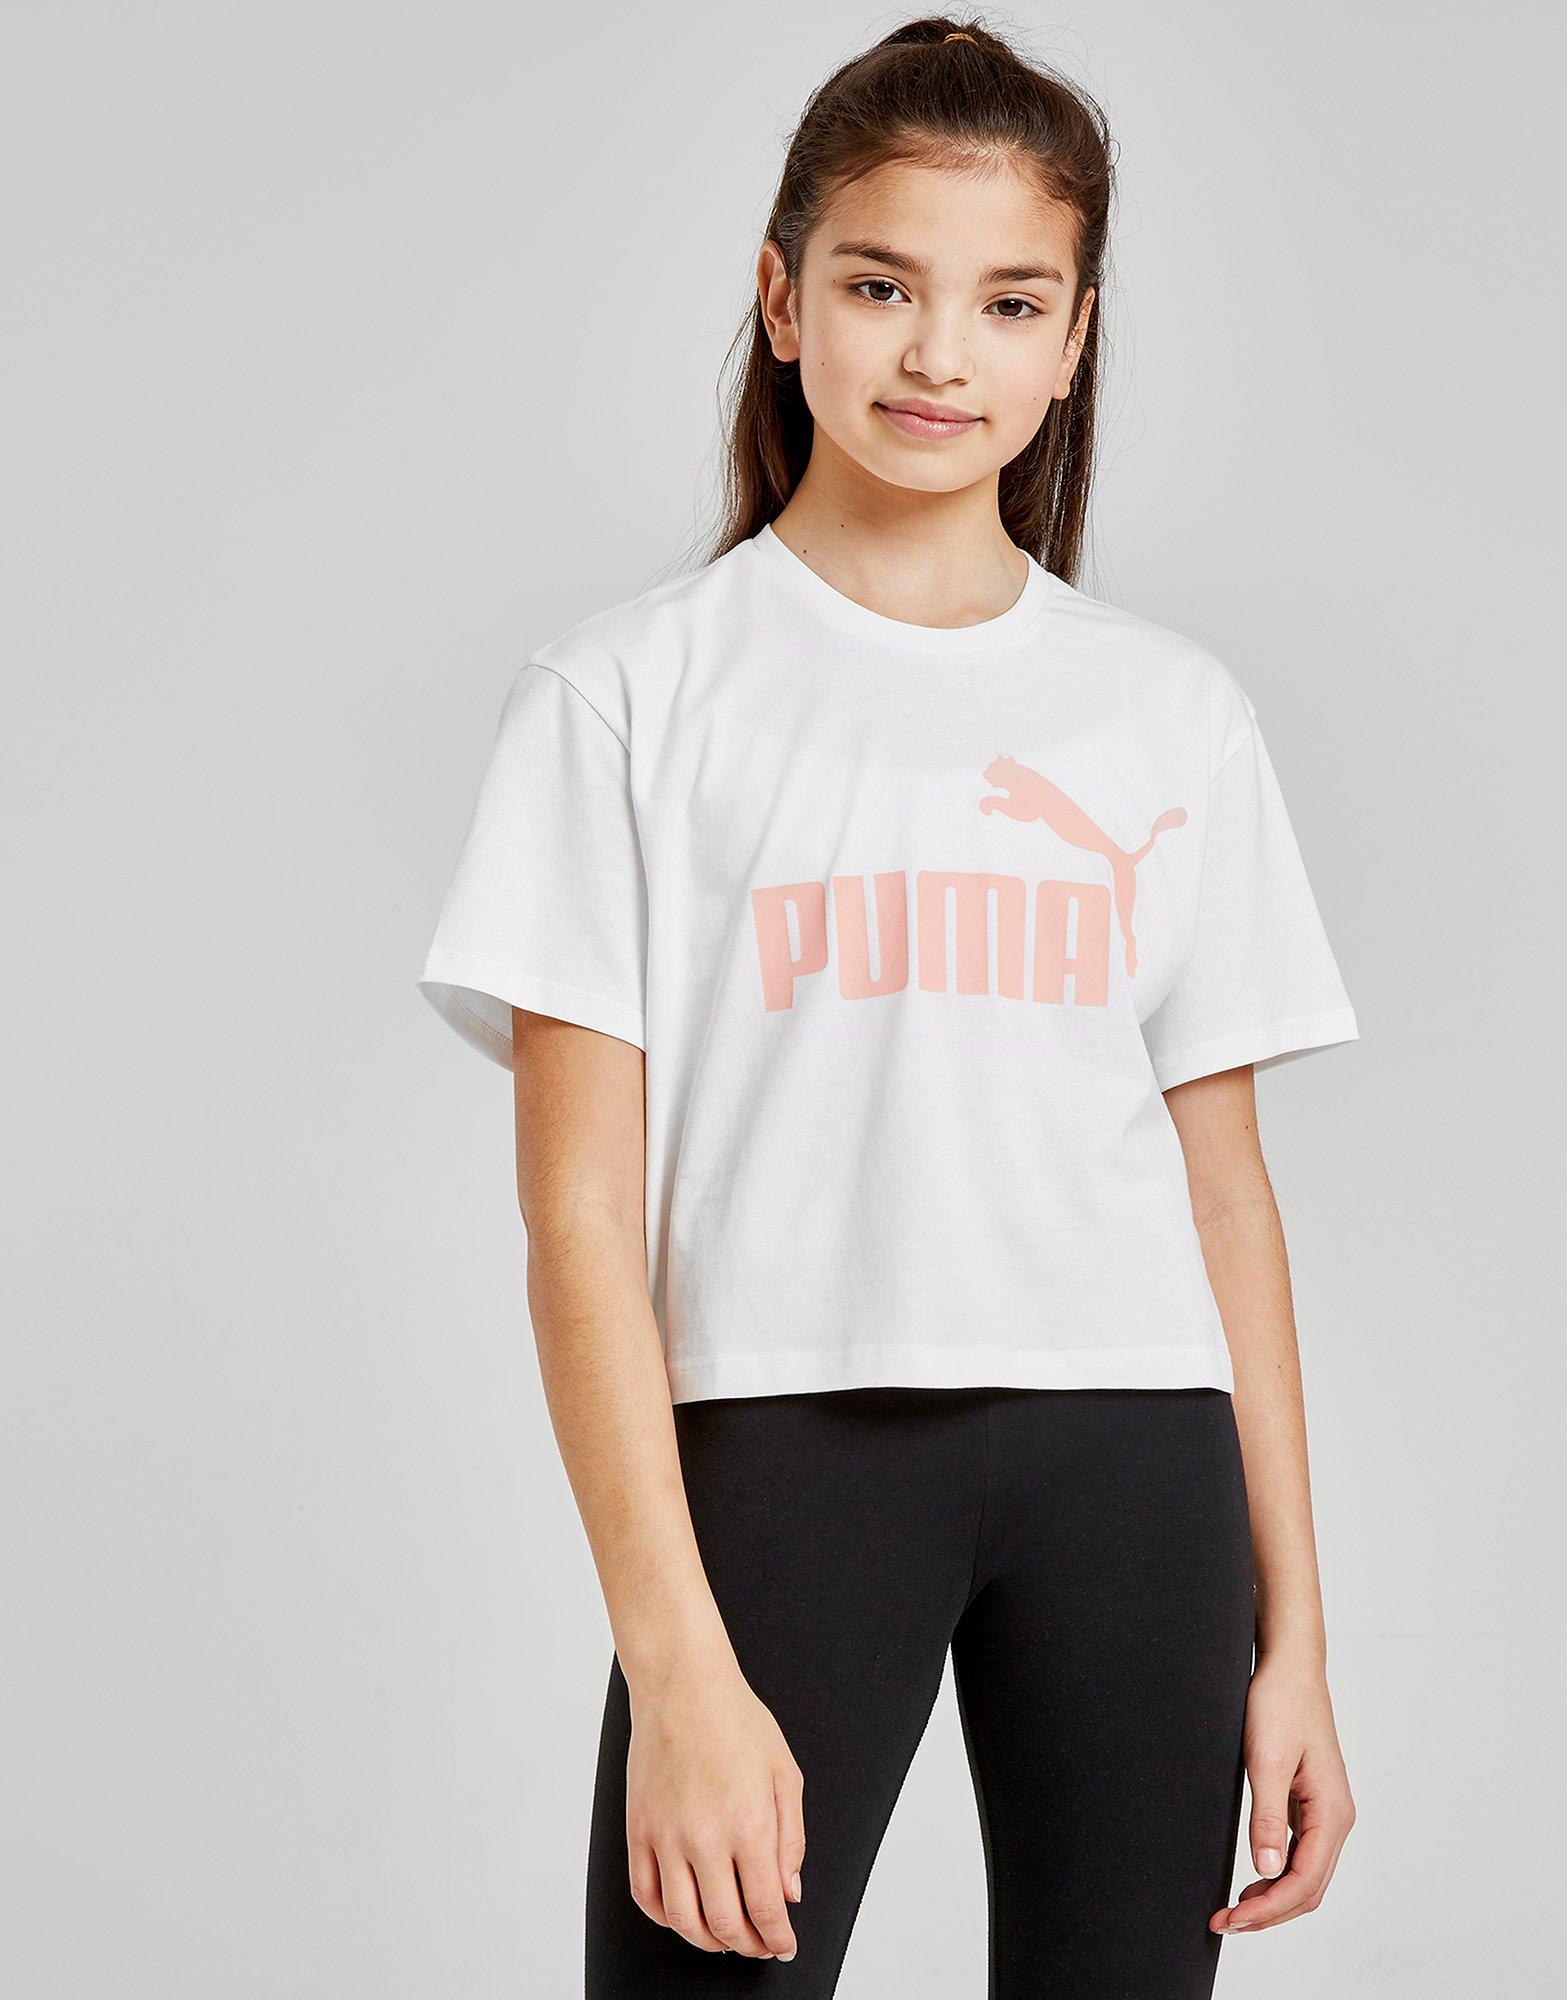 New Puma Girls’ Core Crop T-Shirt | eBay